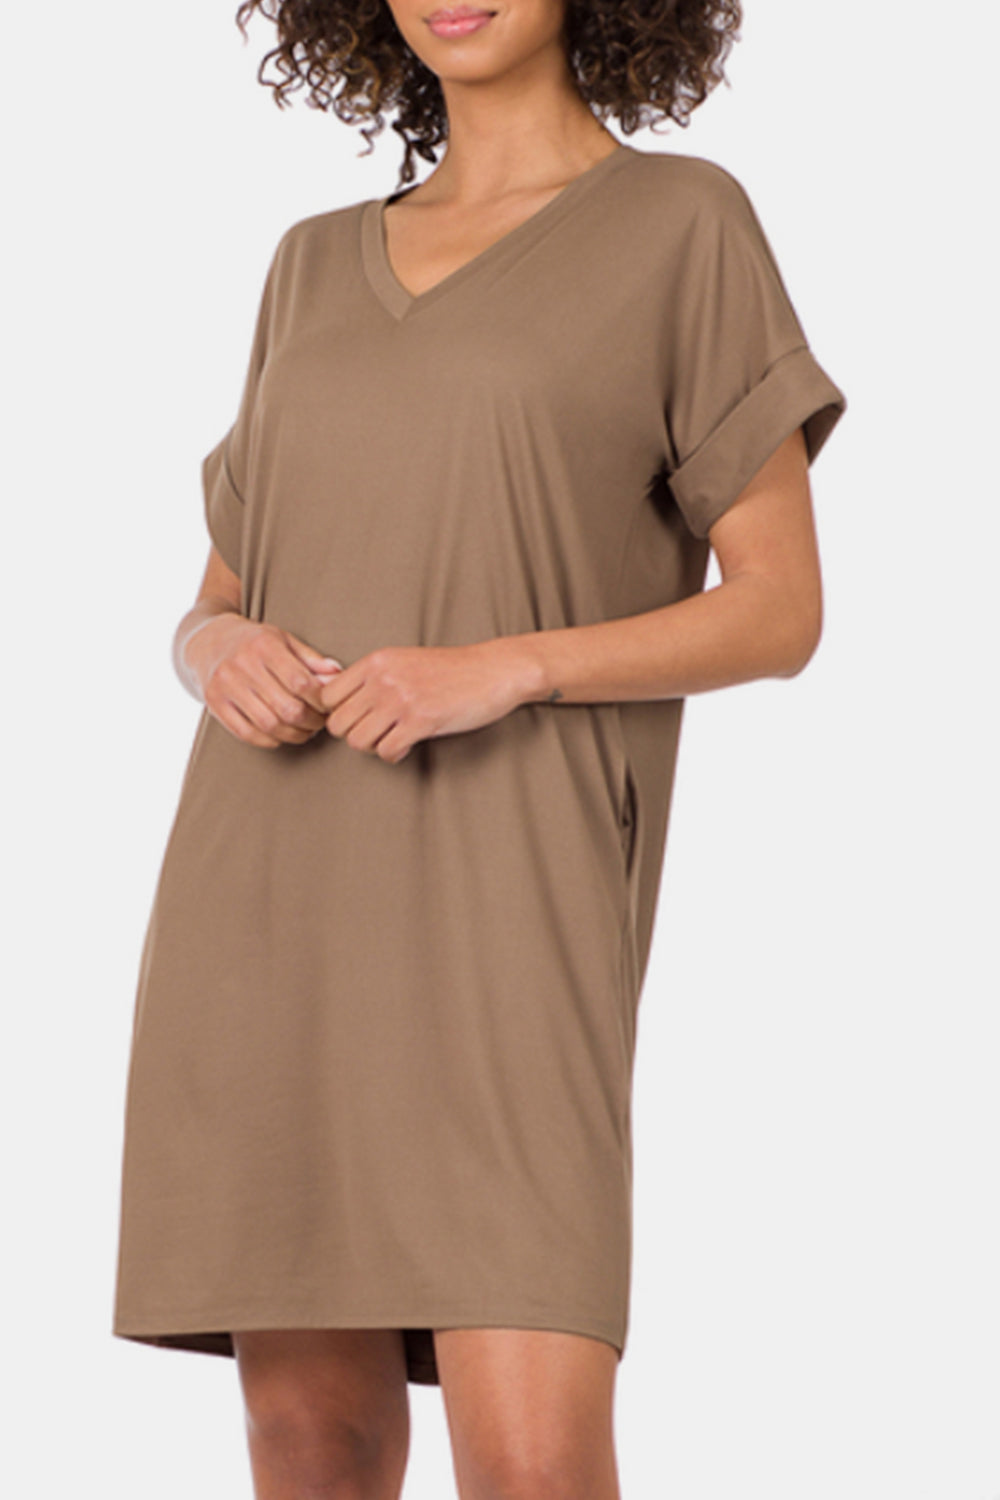 Adriana - Rolled Short Sleeve V-Neck Dress - Mocha - Exclusively Online